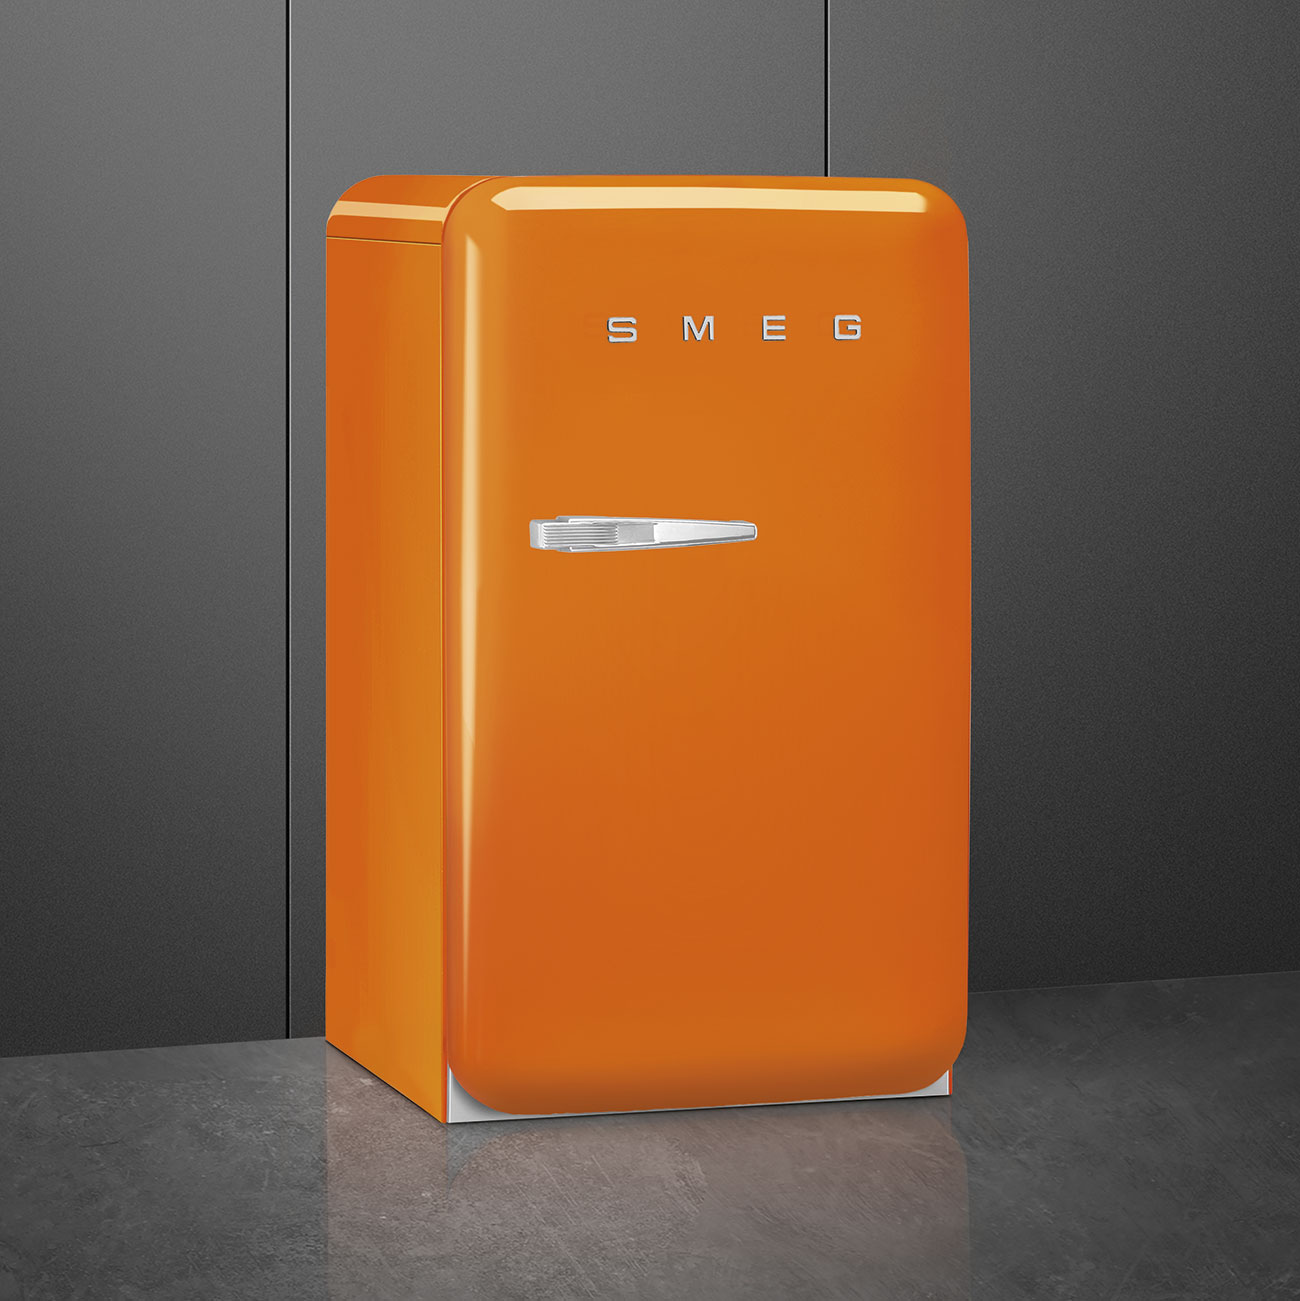 Oranje koelkast - Smeg_3